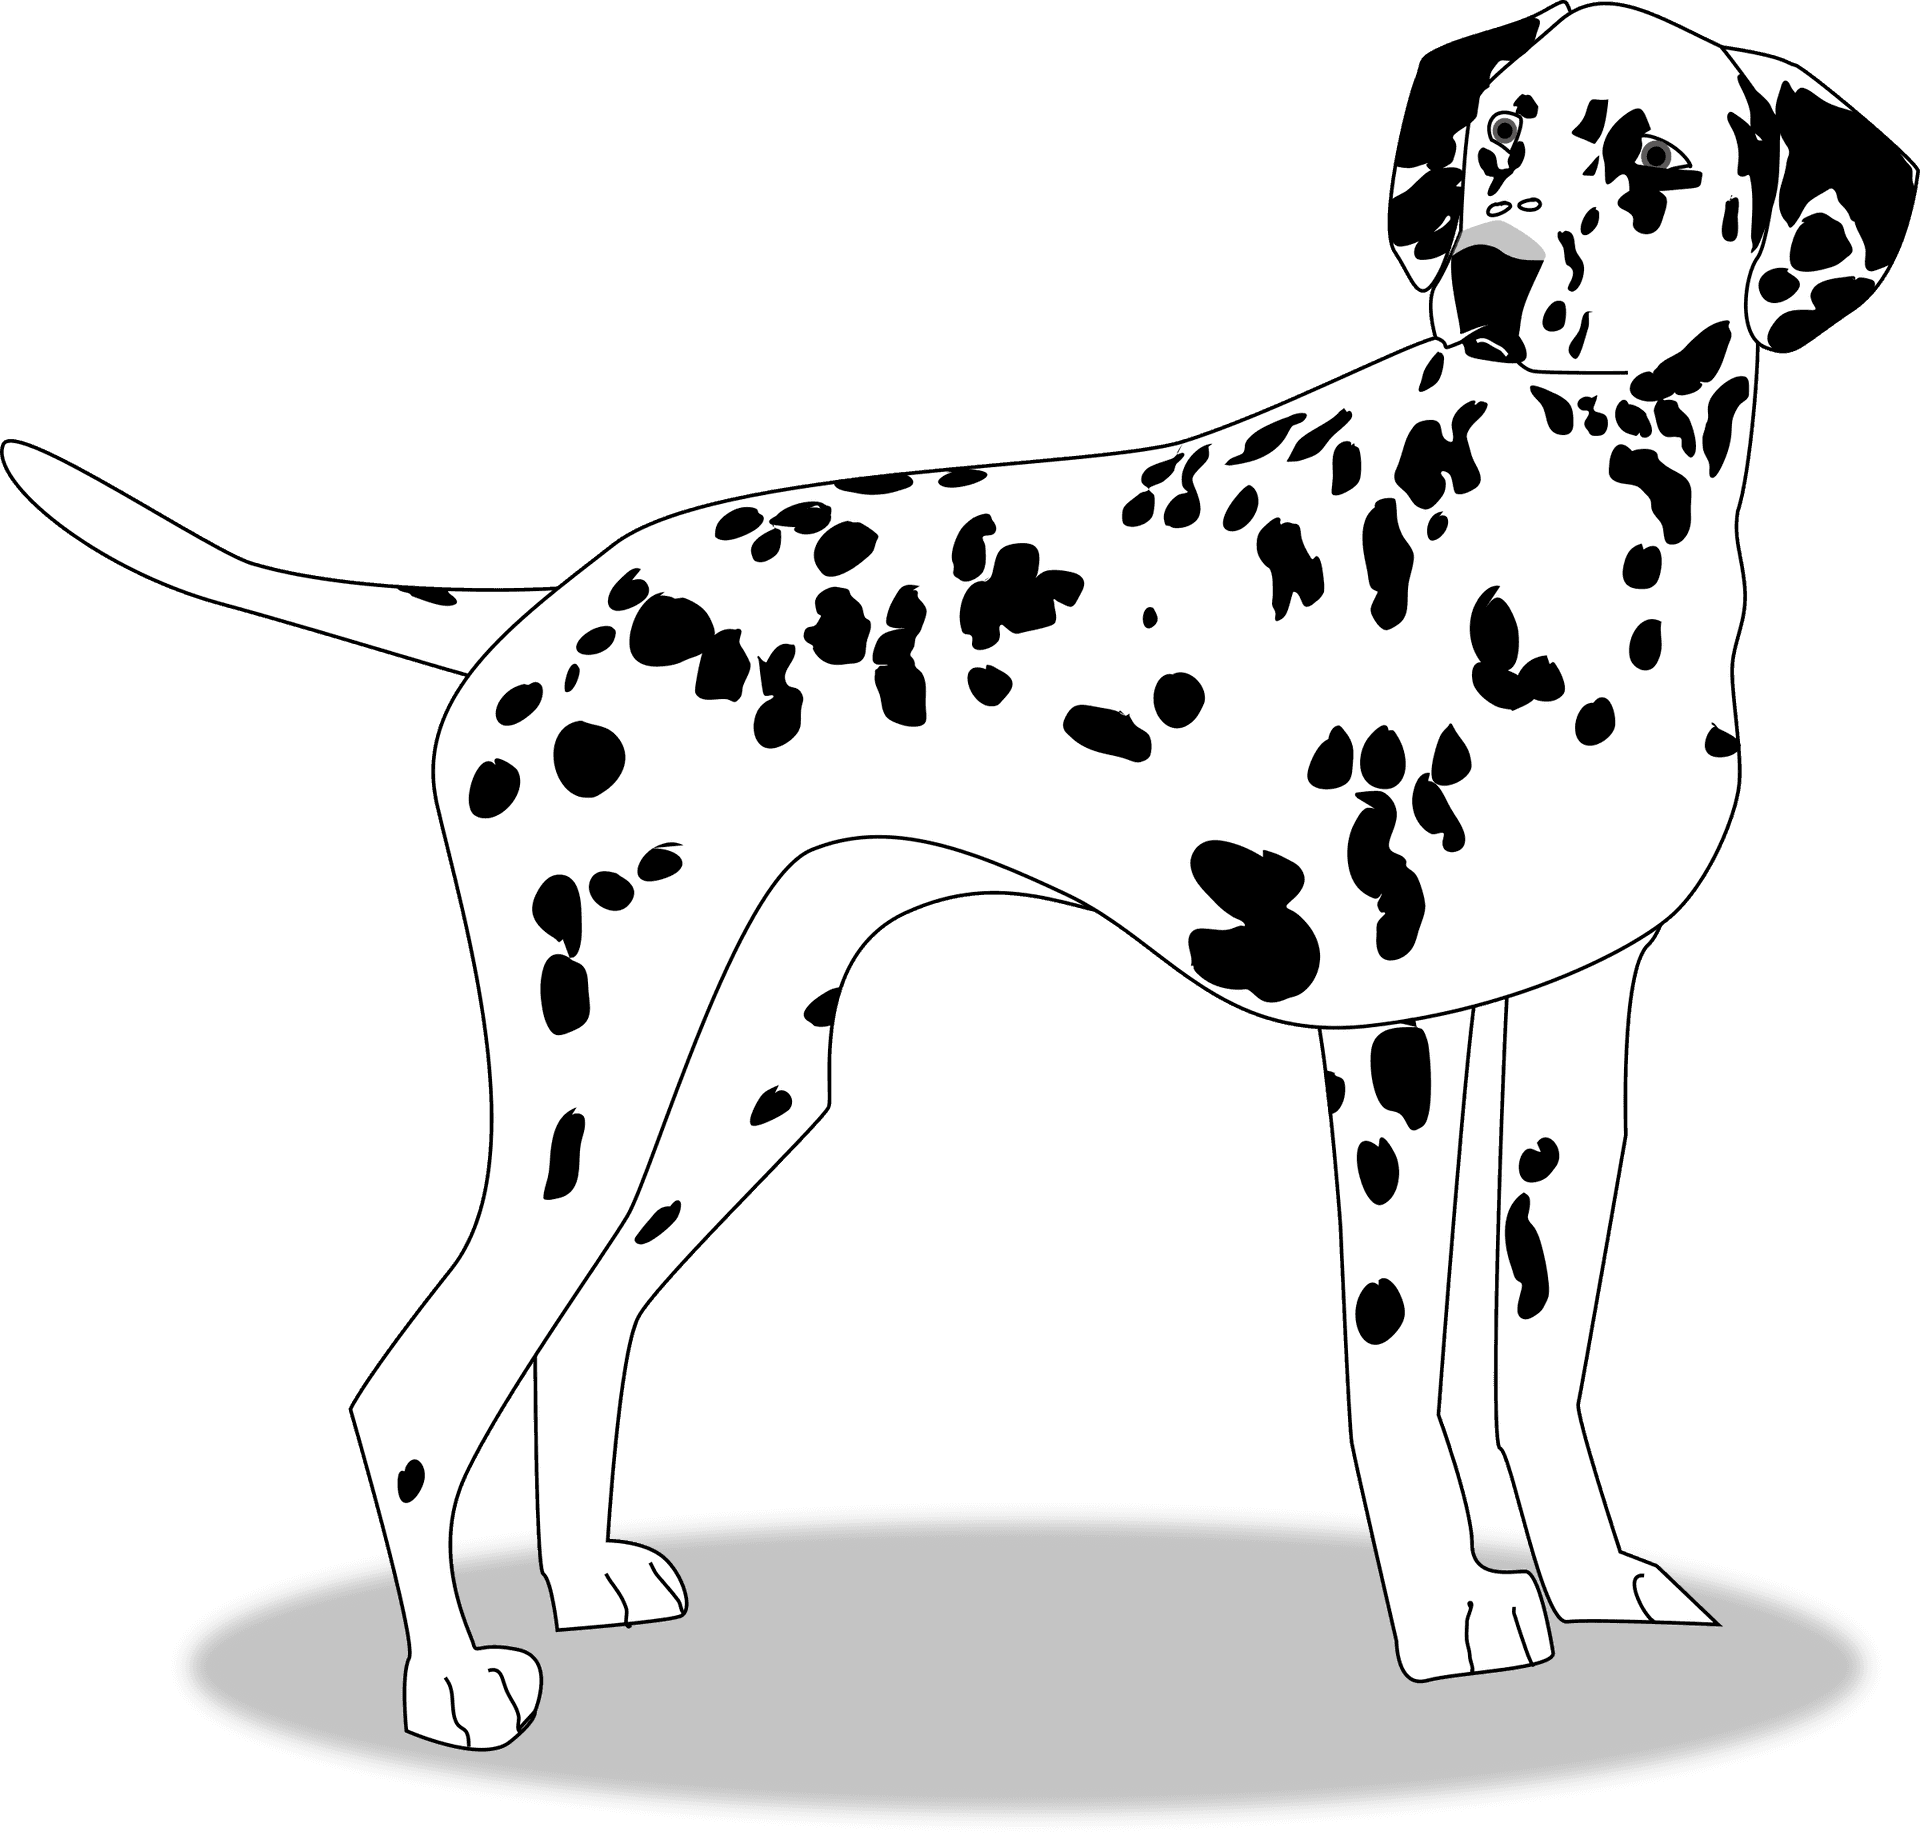 Dalmatian Dog Illustration PNG image